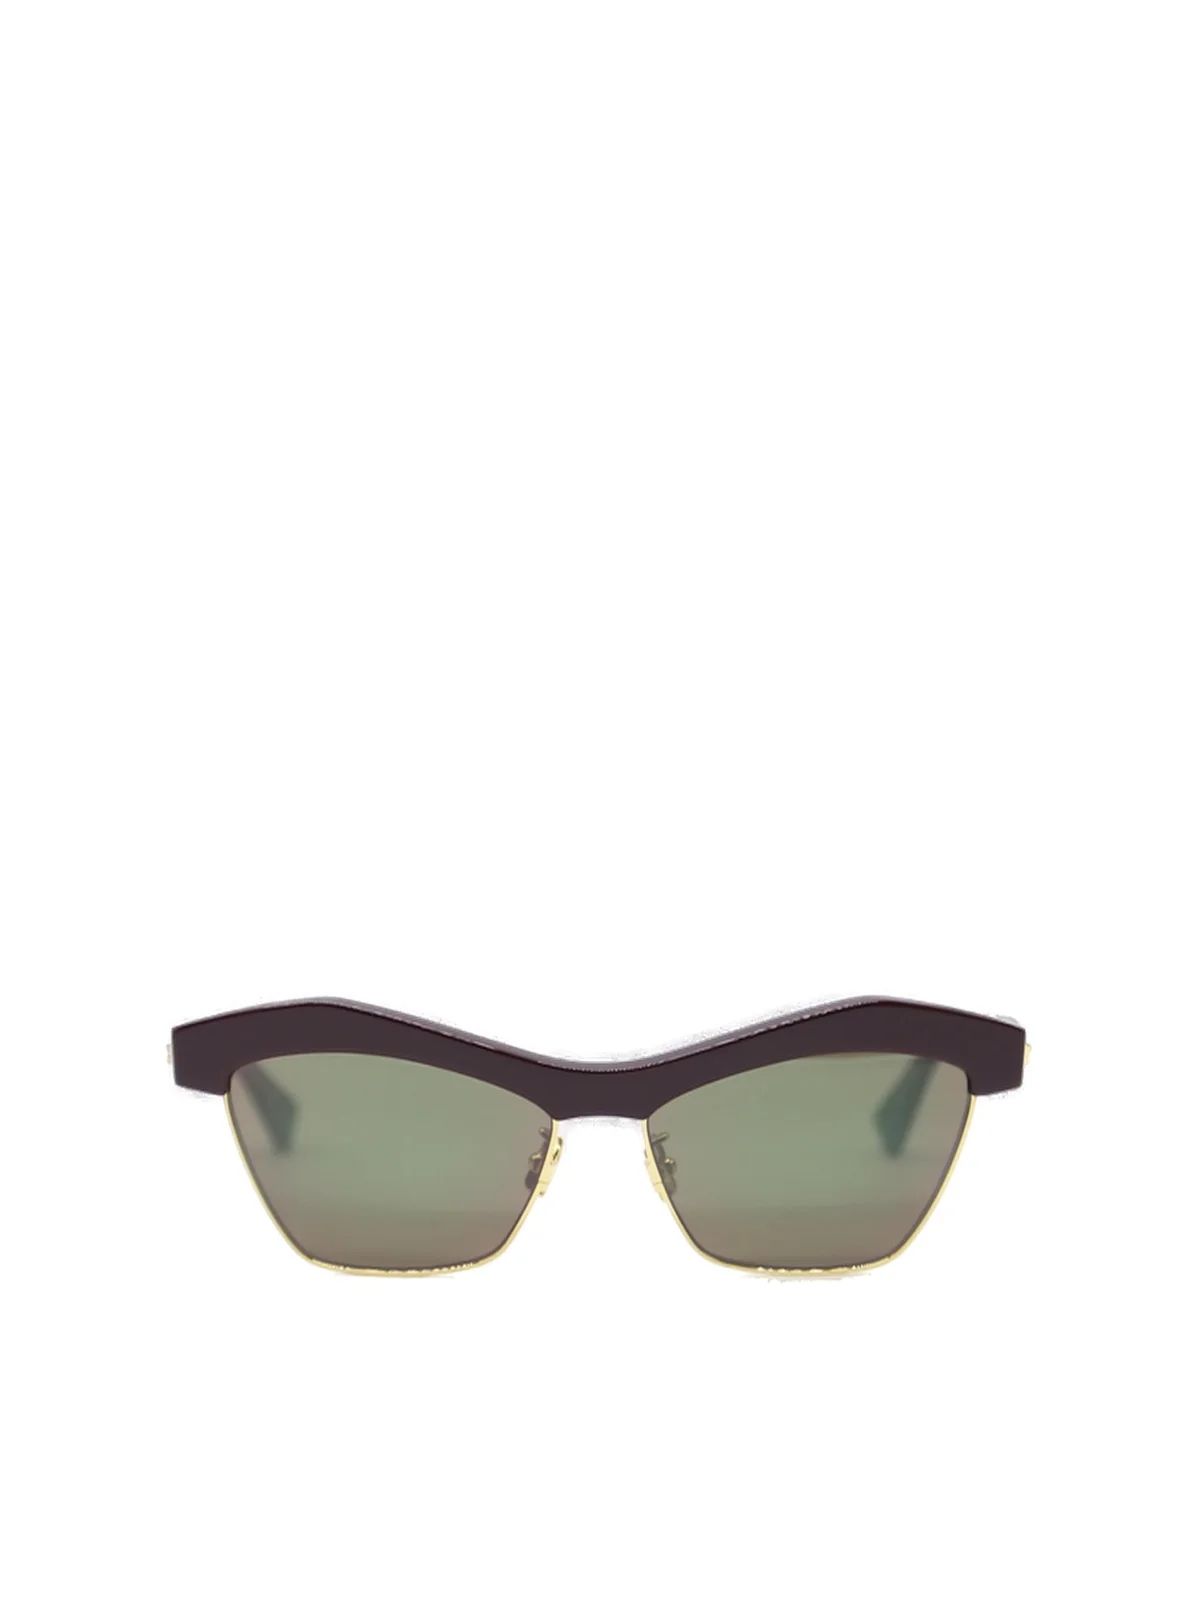 Bottega Veneta Eyewear Half-Rim Sunglasses | Cettire Global